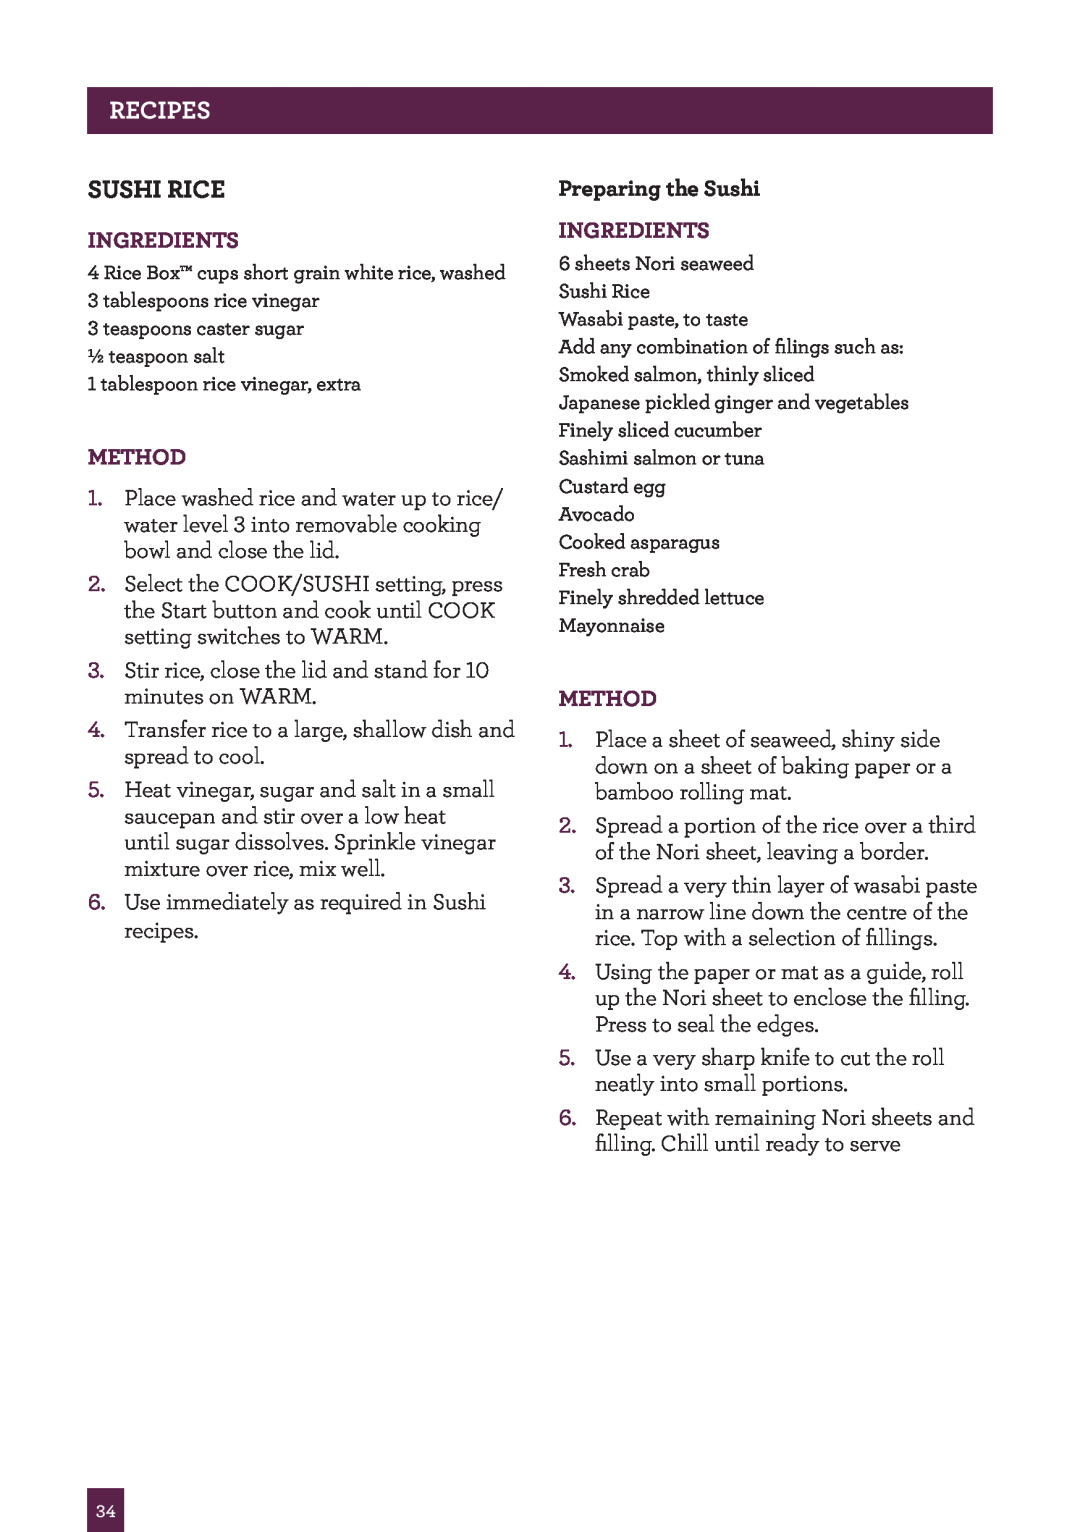 Breville BRC460 brochure Sushi Rice, Recipes, Ingredients, Method 